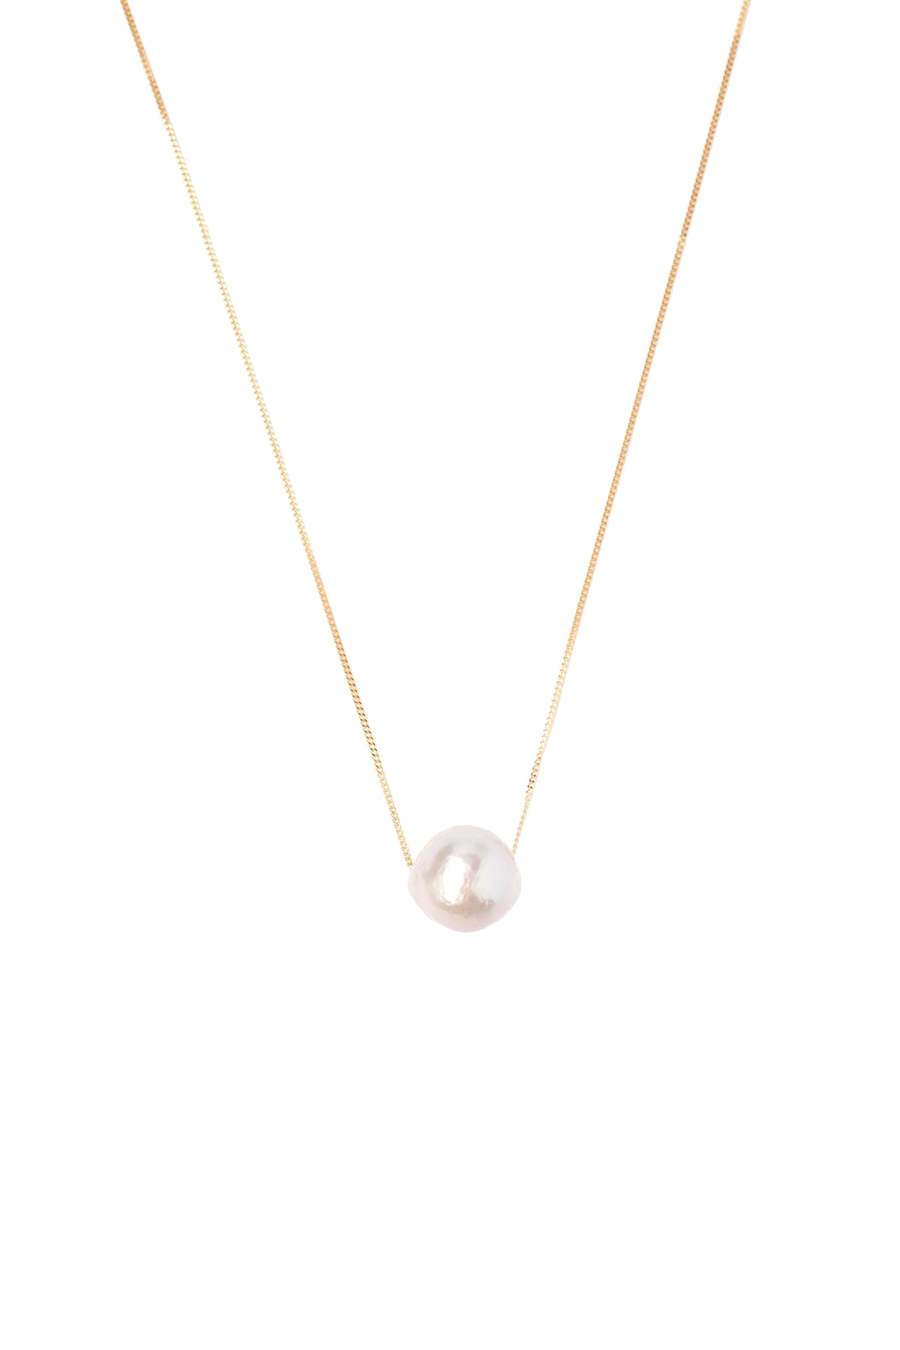 Floating Pearl Necklace - Shop Yu Fashion